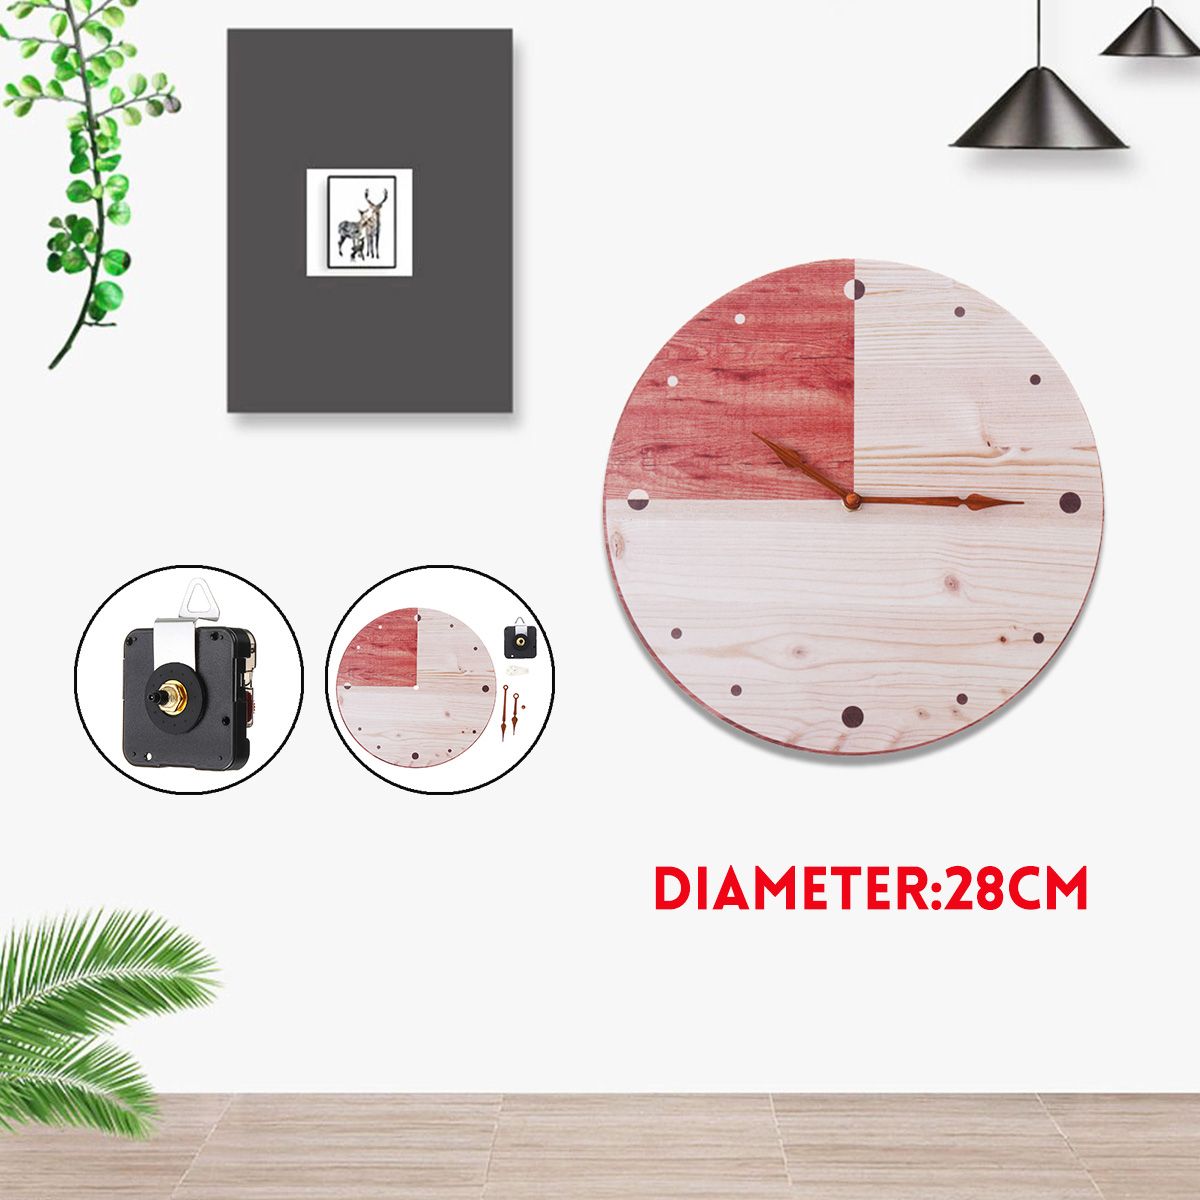 11-Retro-Round-Wooden-Wall-Clock-DIY-Digital-Round-Room-Home-Office-Bar-Decor-1485130